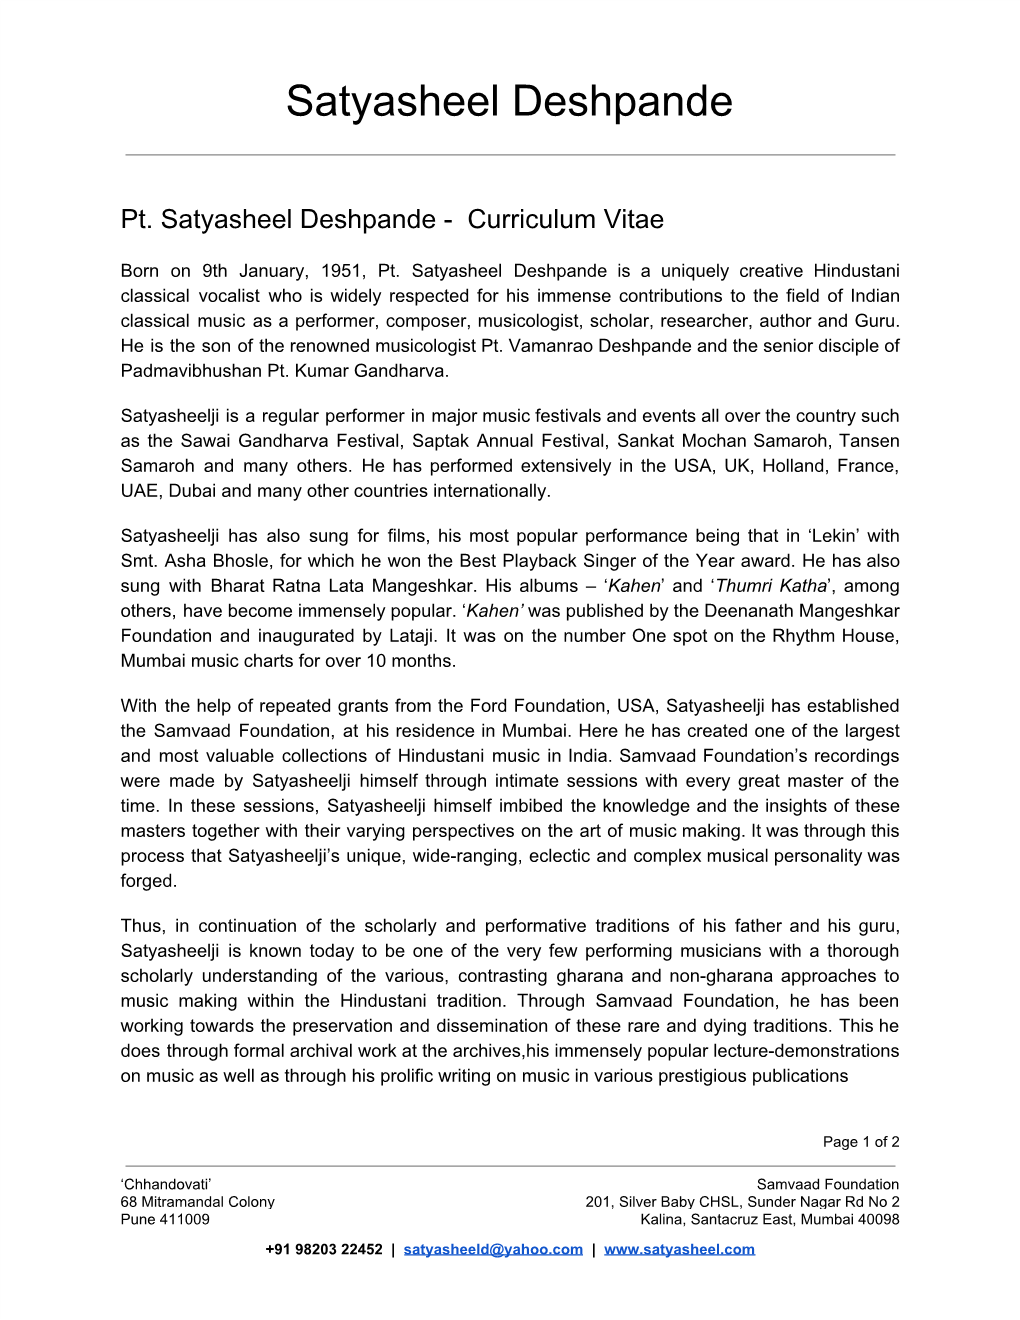 Pt. Satyasheel Deshpande - Curriculum Vitae